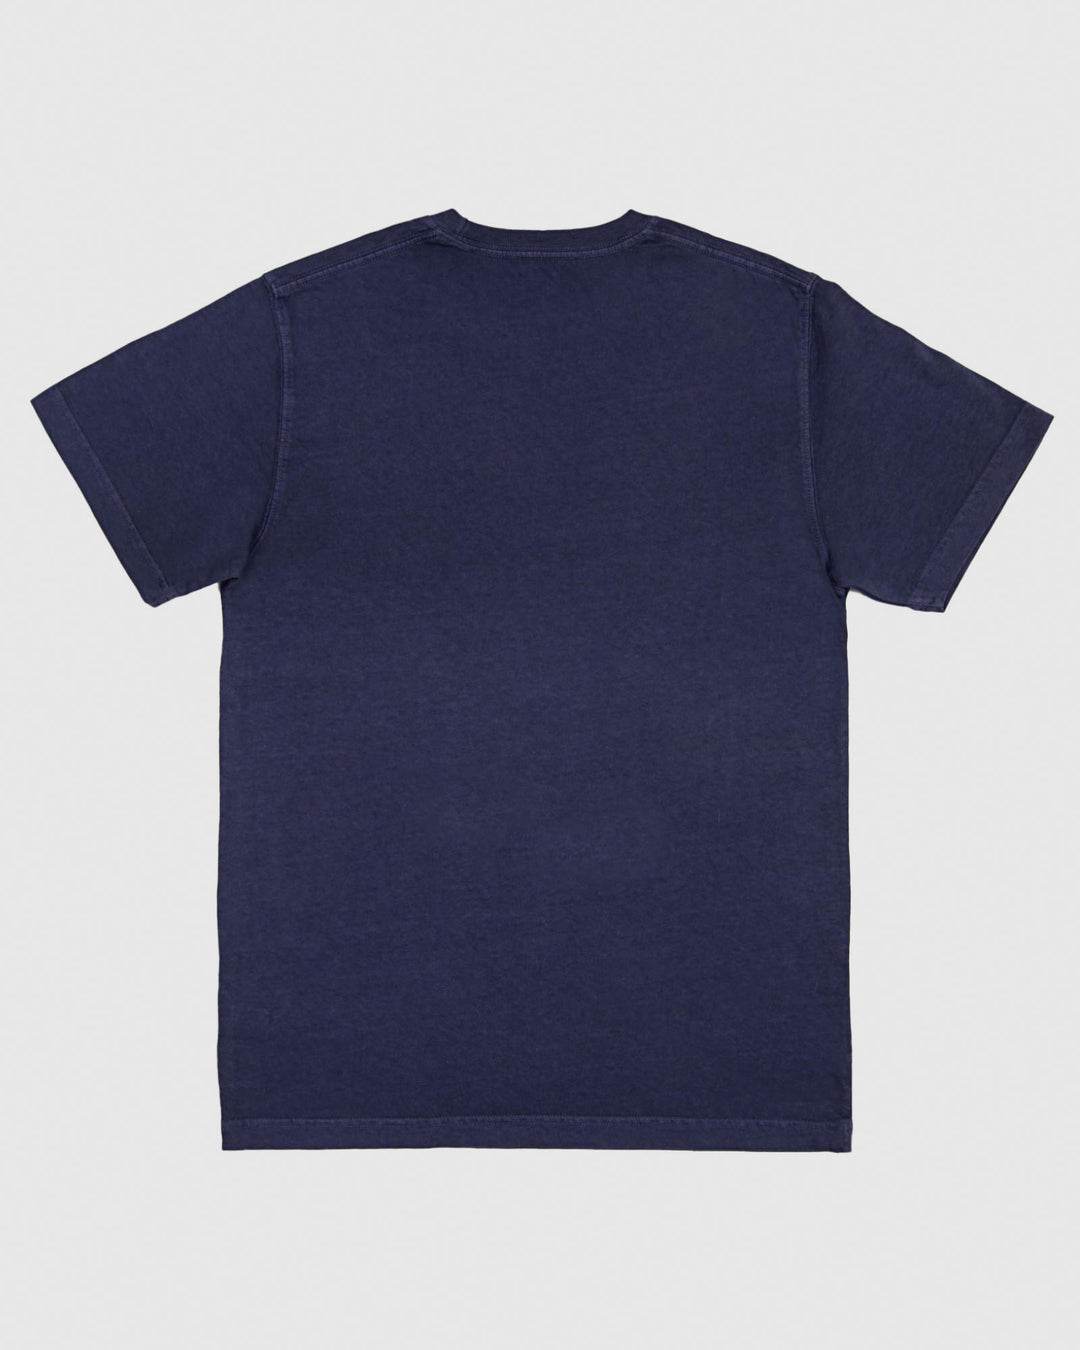 Backside of navy blue t-shirt